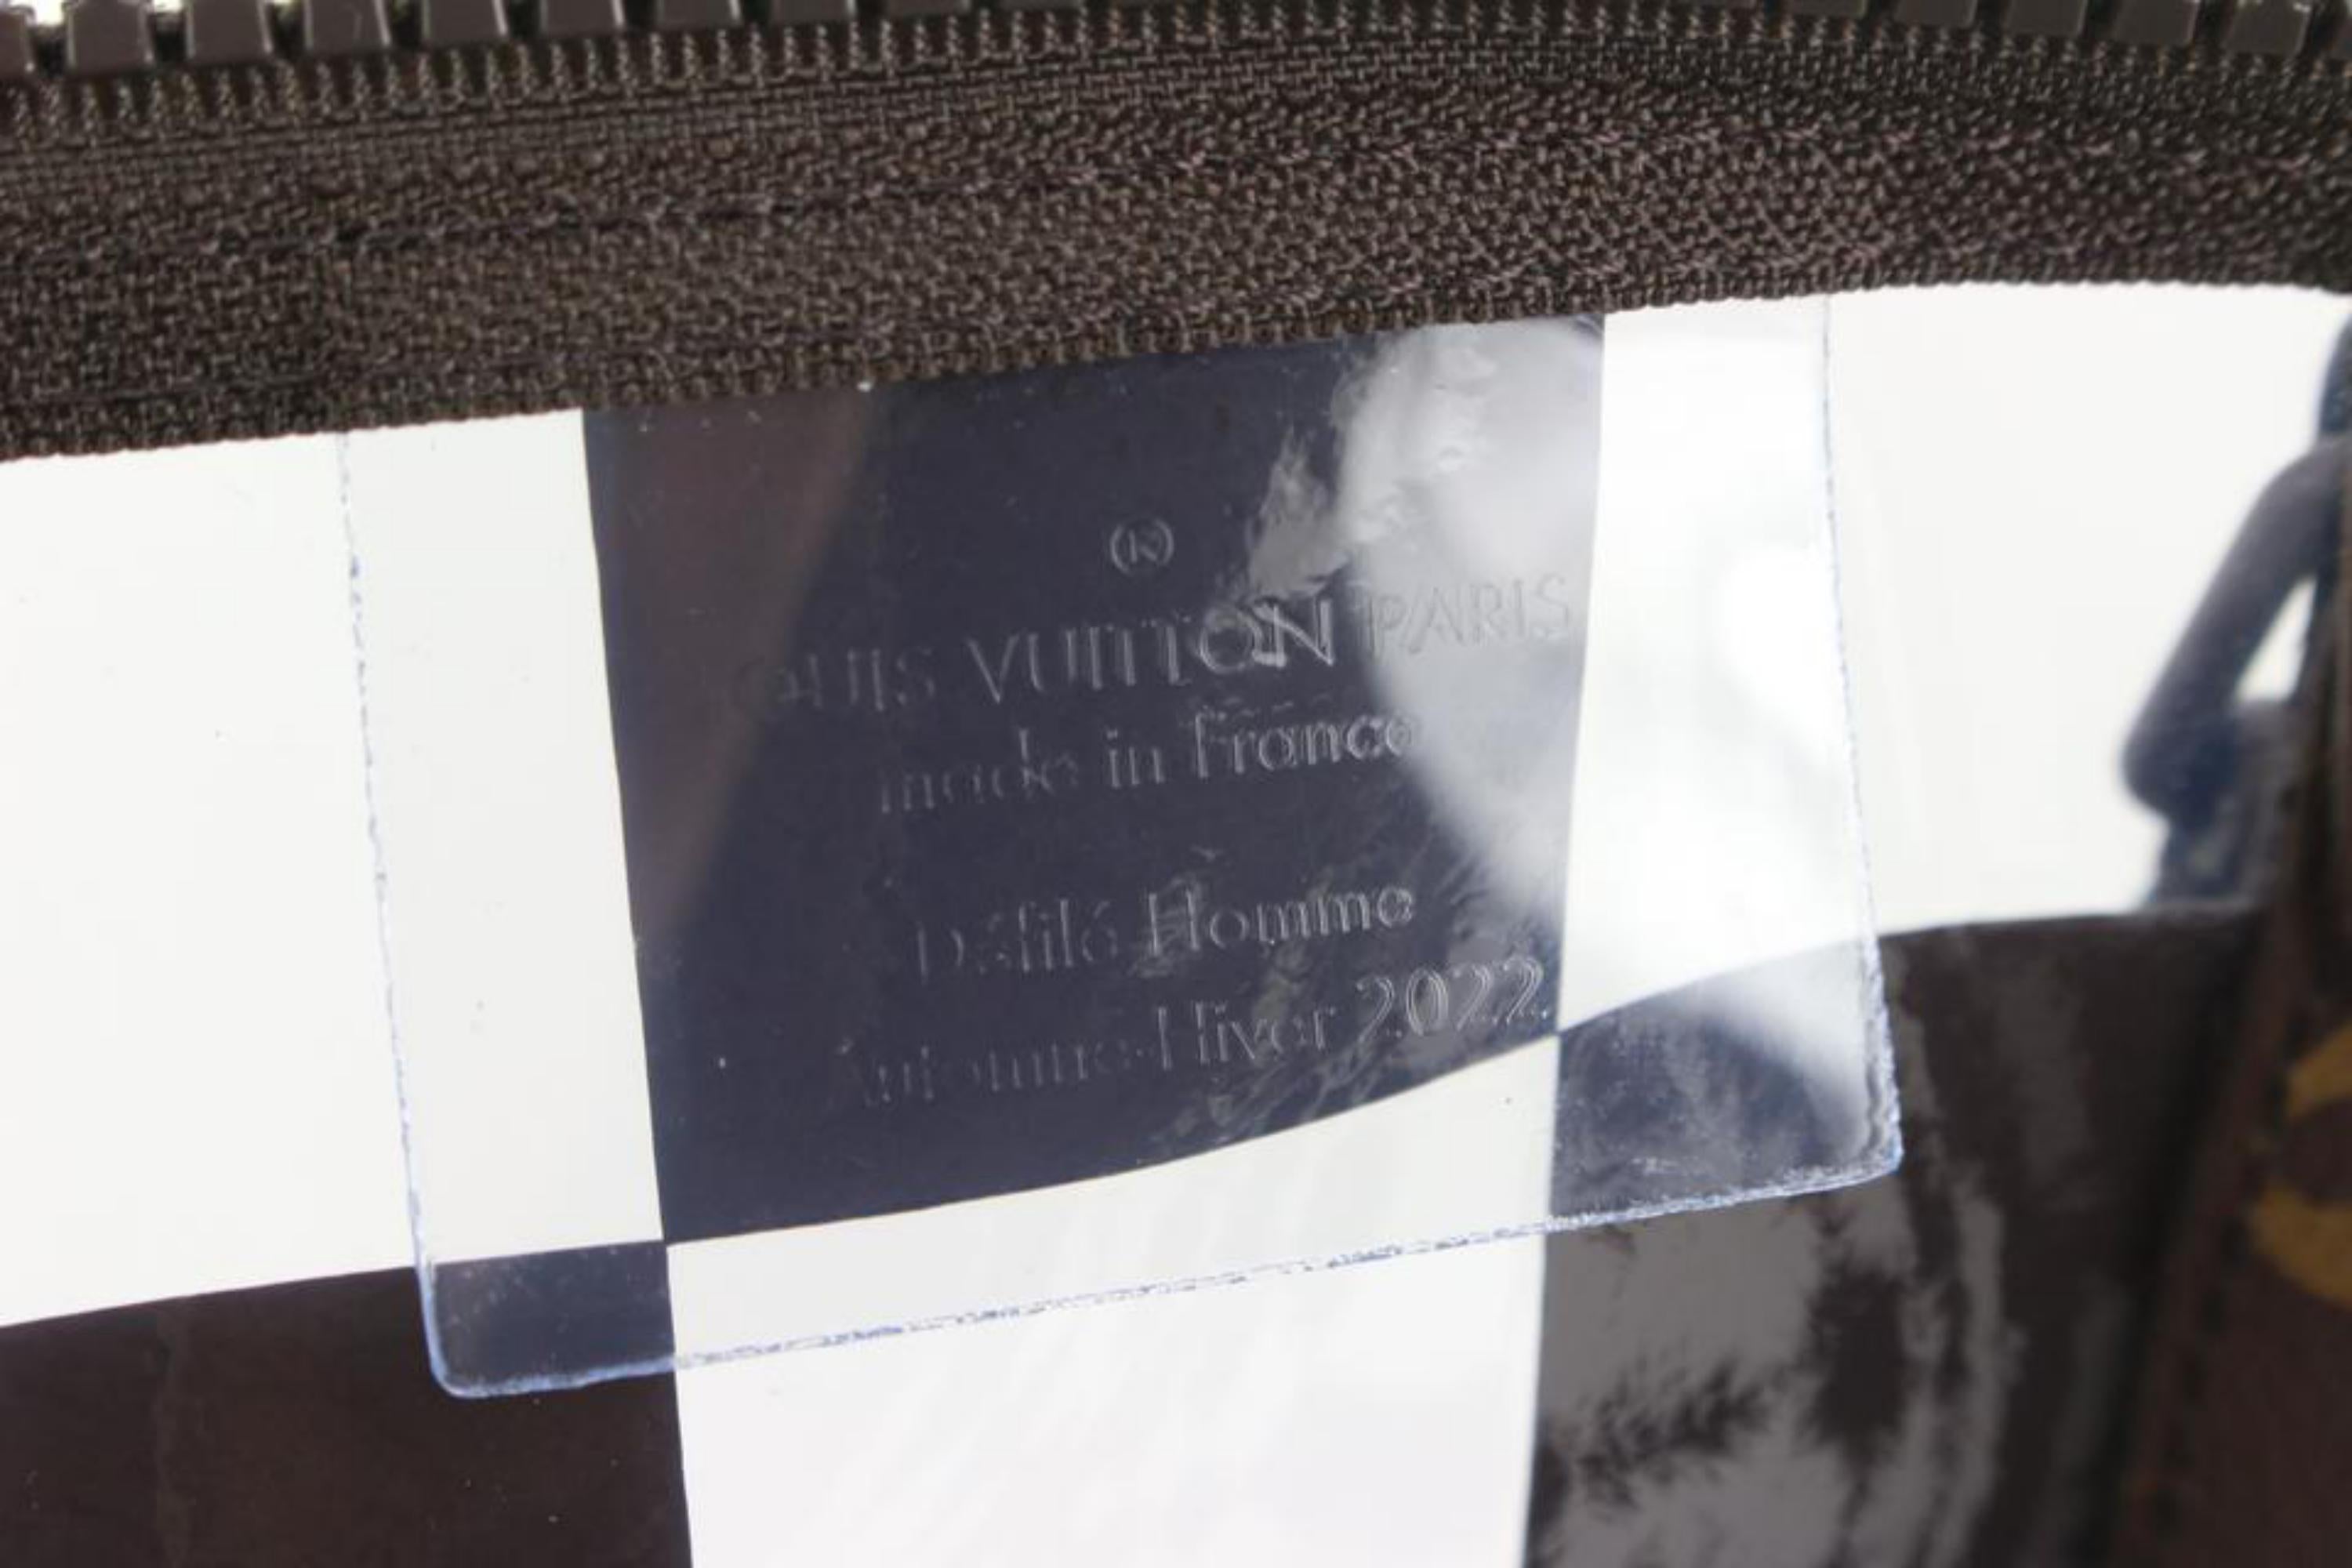 Louis Vuitton Keepall Rgb Clear Ss19 Virgil Abloh Bandouliere 50